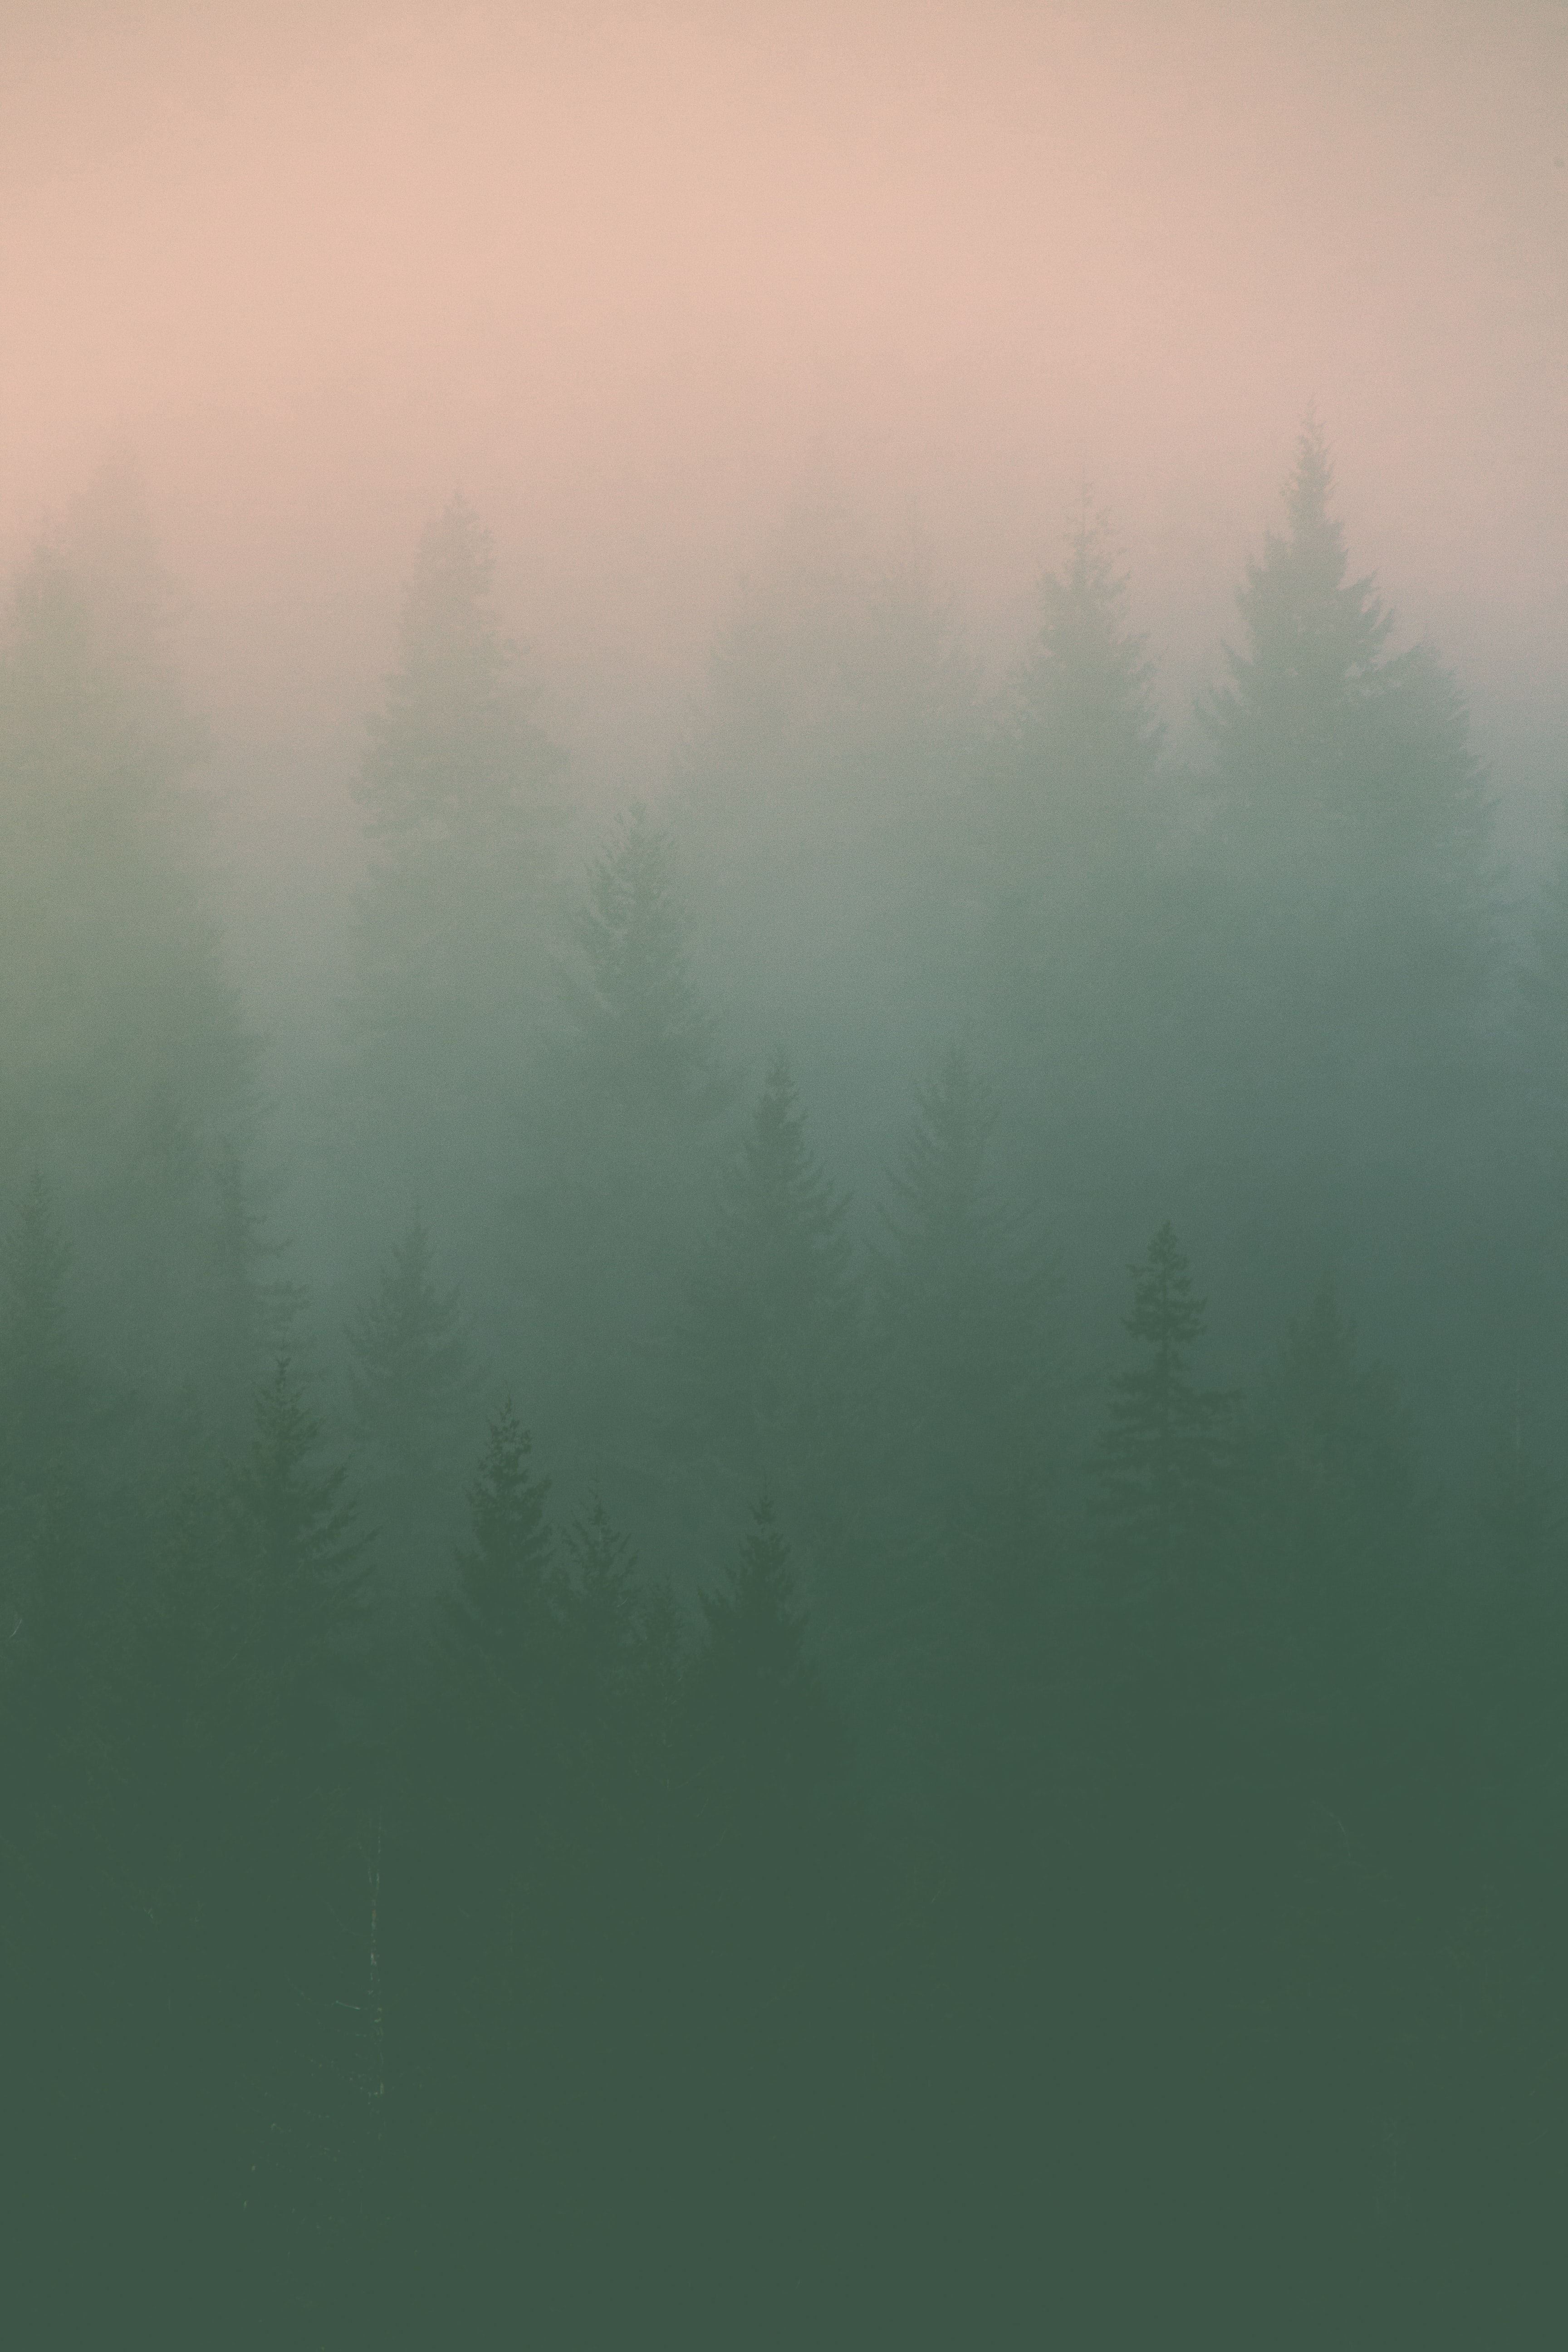 110111 descargar imagen naturaleza, árboles, niebla, siluetas, calina, neblina: fondos de pantalla y protectores de pantalla gratis